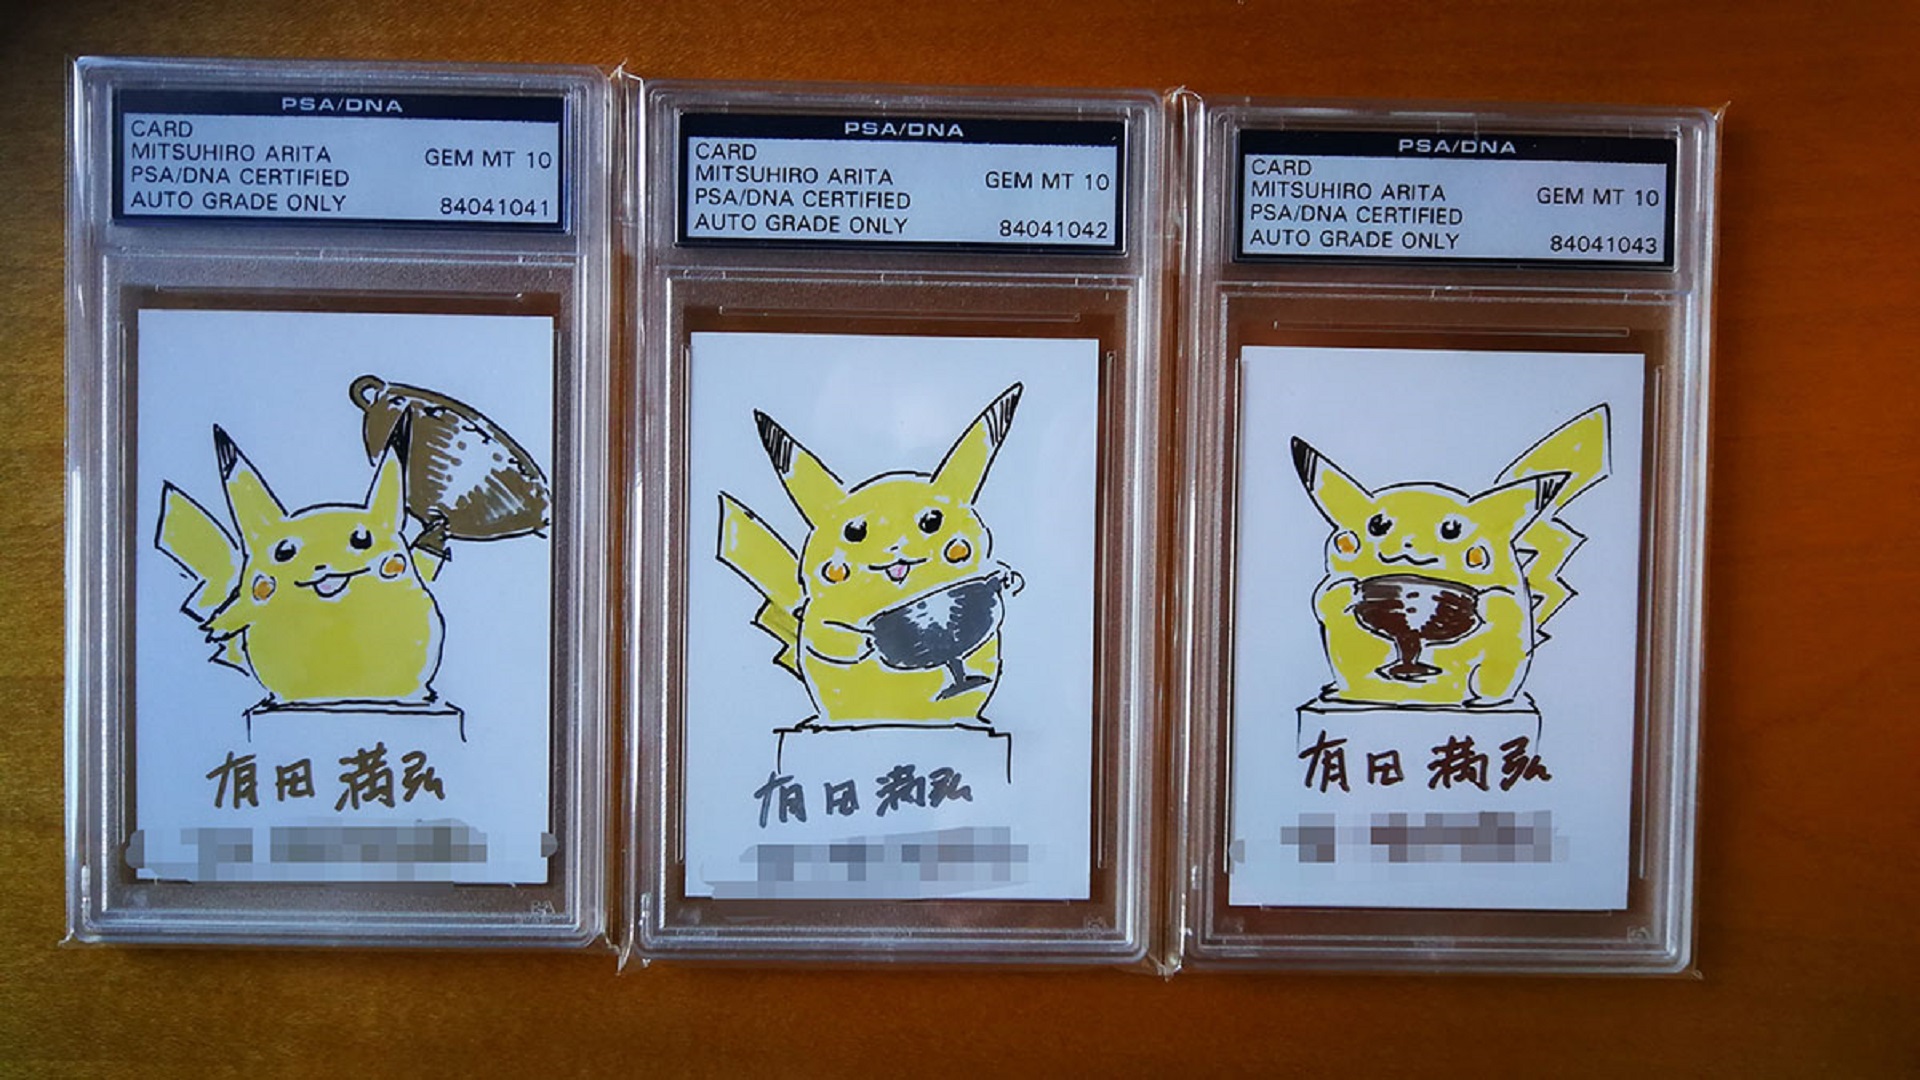 Pokemon Pikachu Illustrator card 1